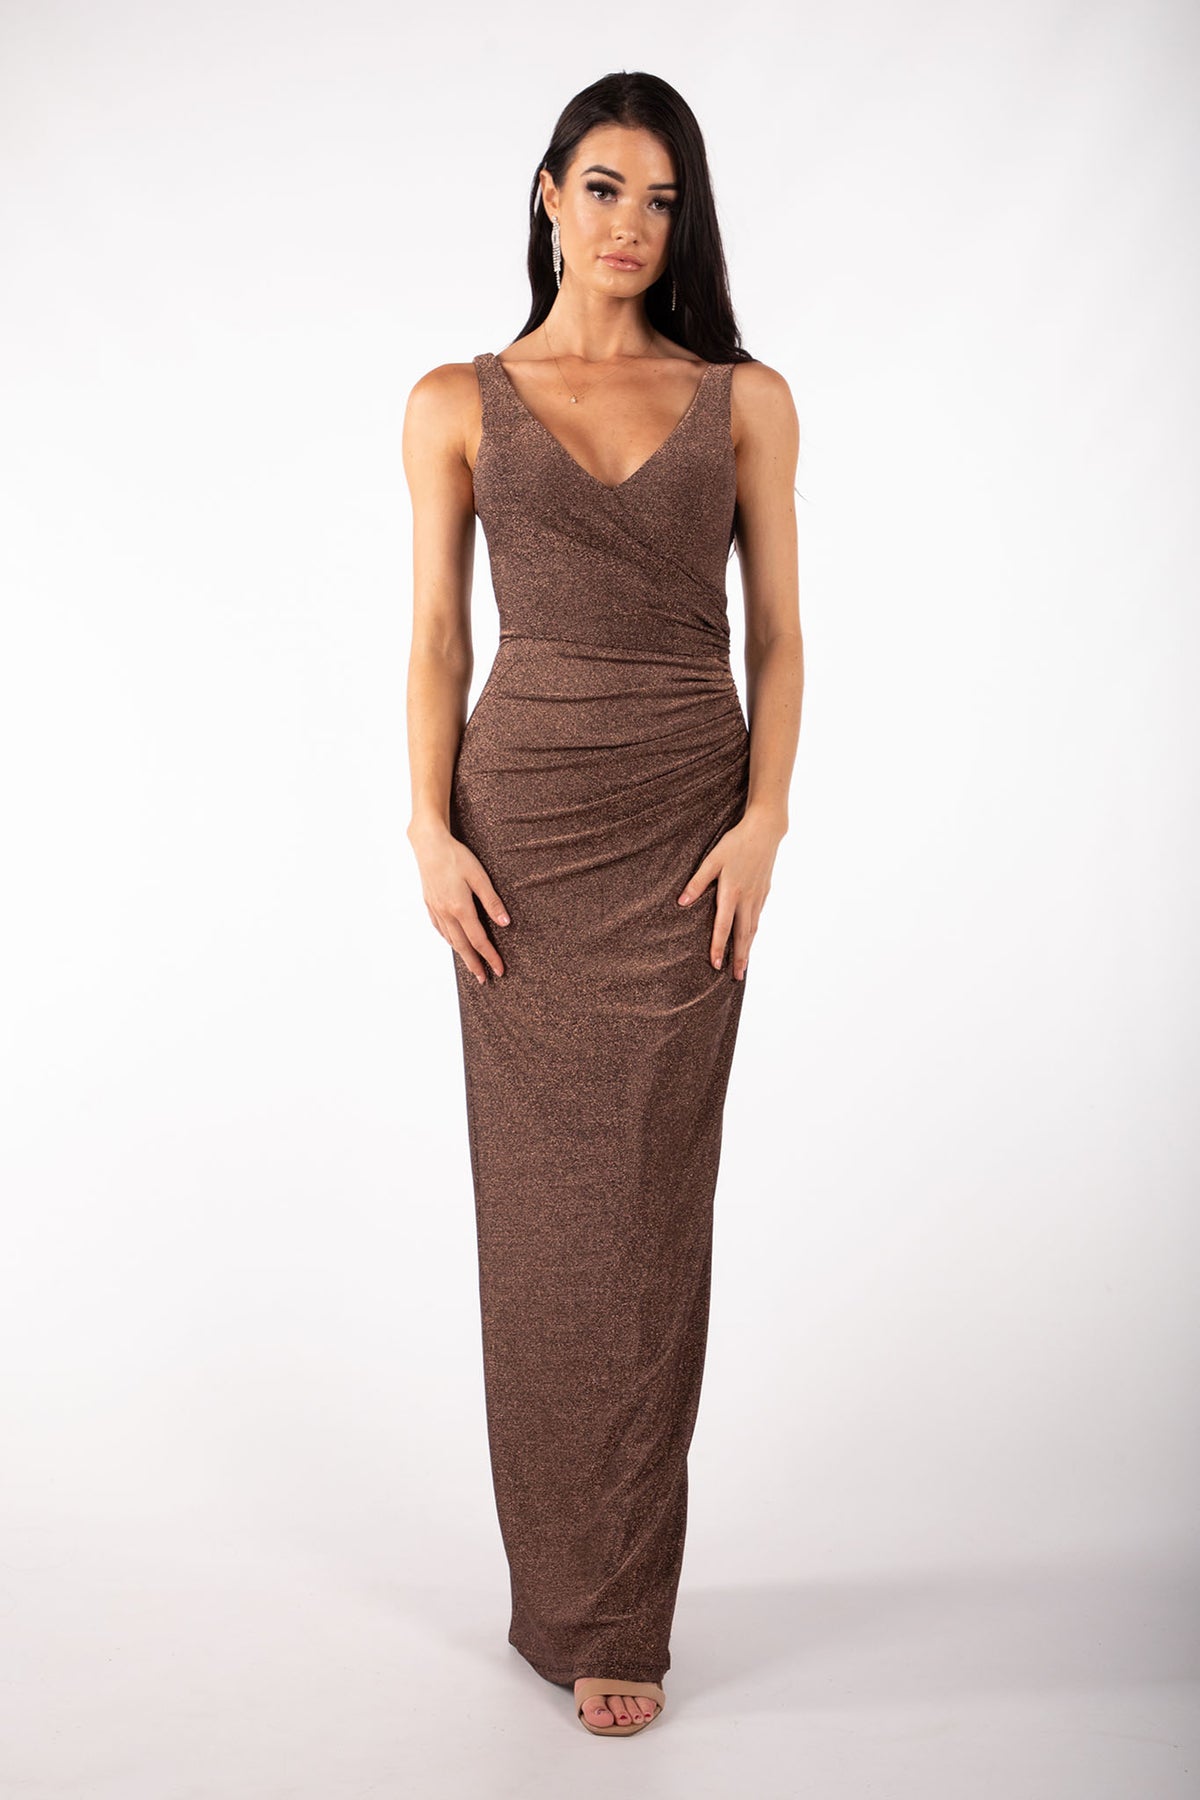 V Neck Formal Maxi Dress with Gathering Detail, Side Split and Open V Back in Glitter Chocolate Brown Color